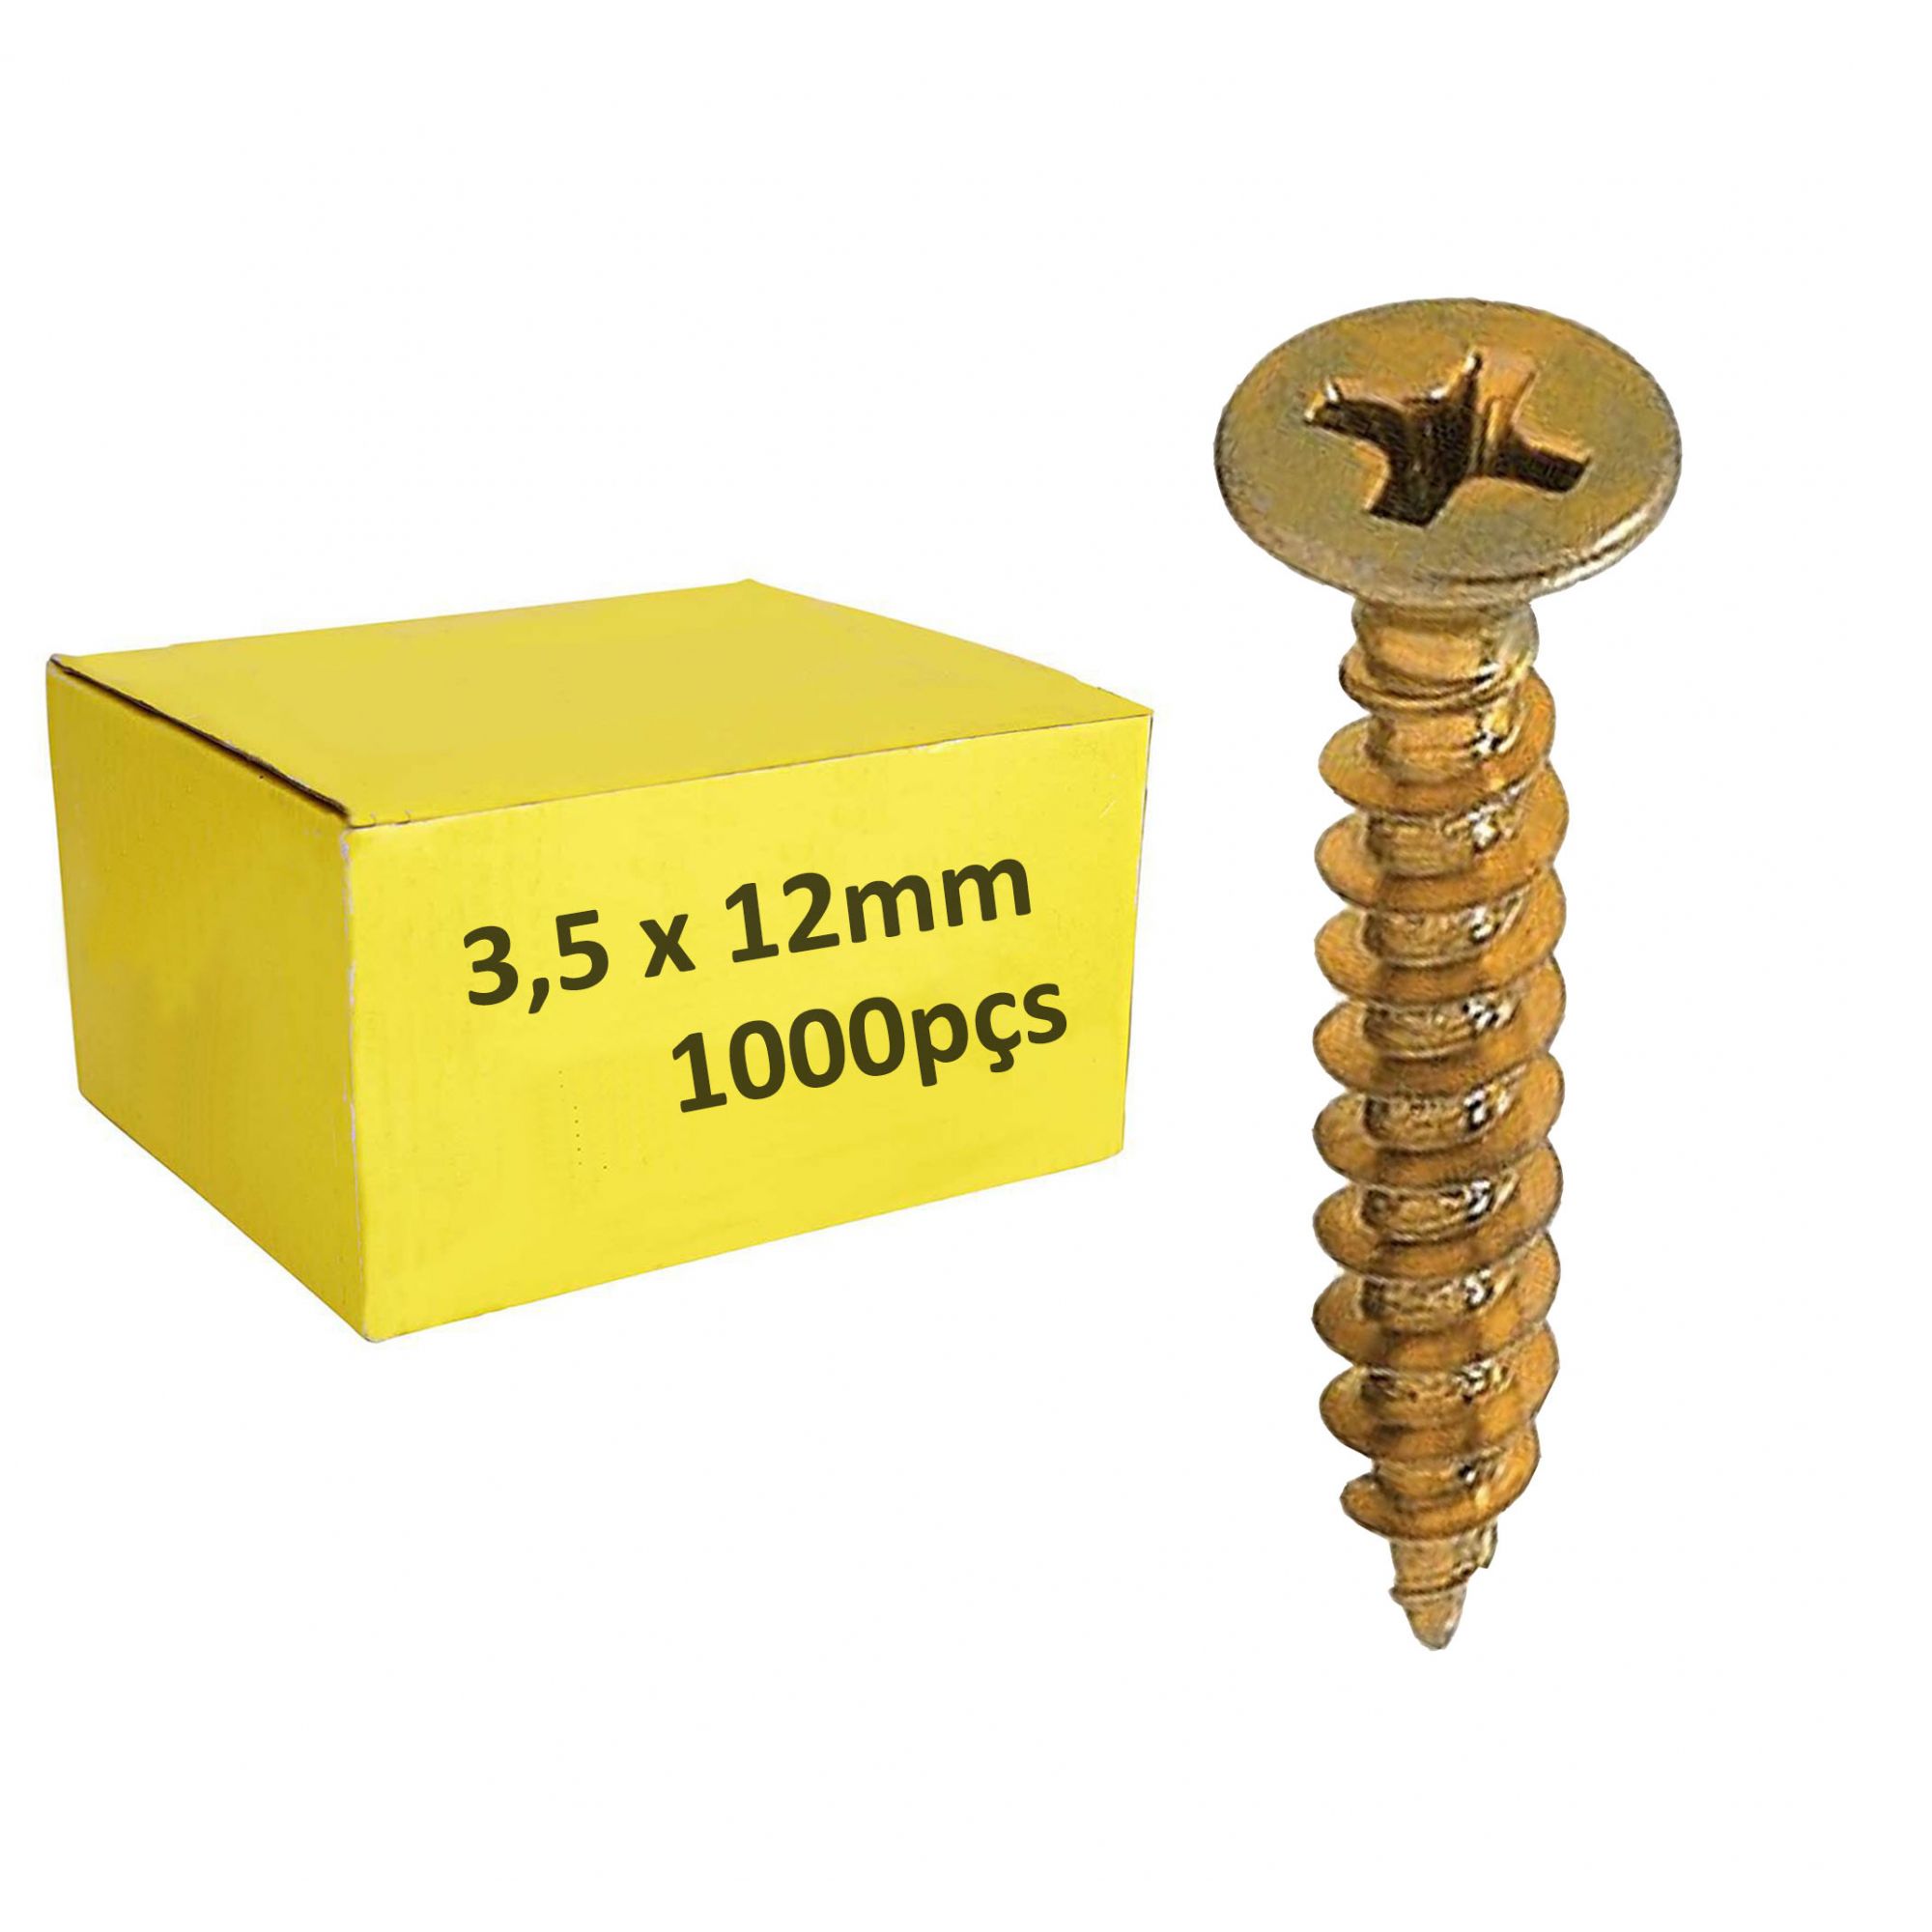 Caixa de Parafuso Chipboard Zincado Amarelo com 1000 peças 3,5mm 12mm